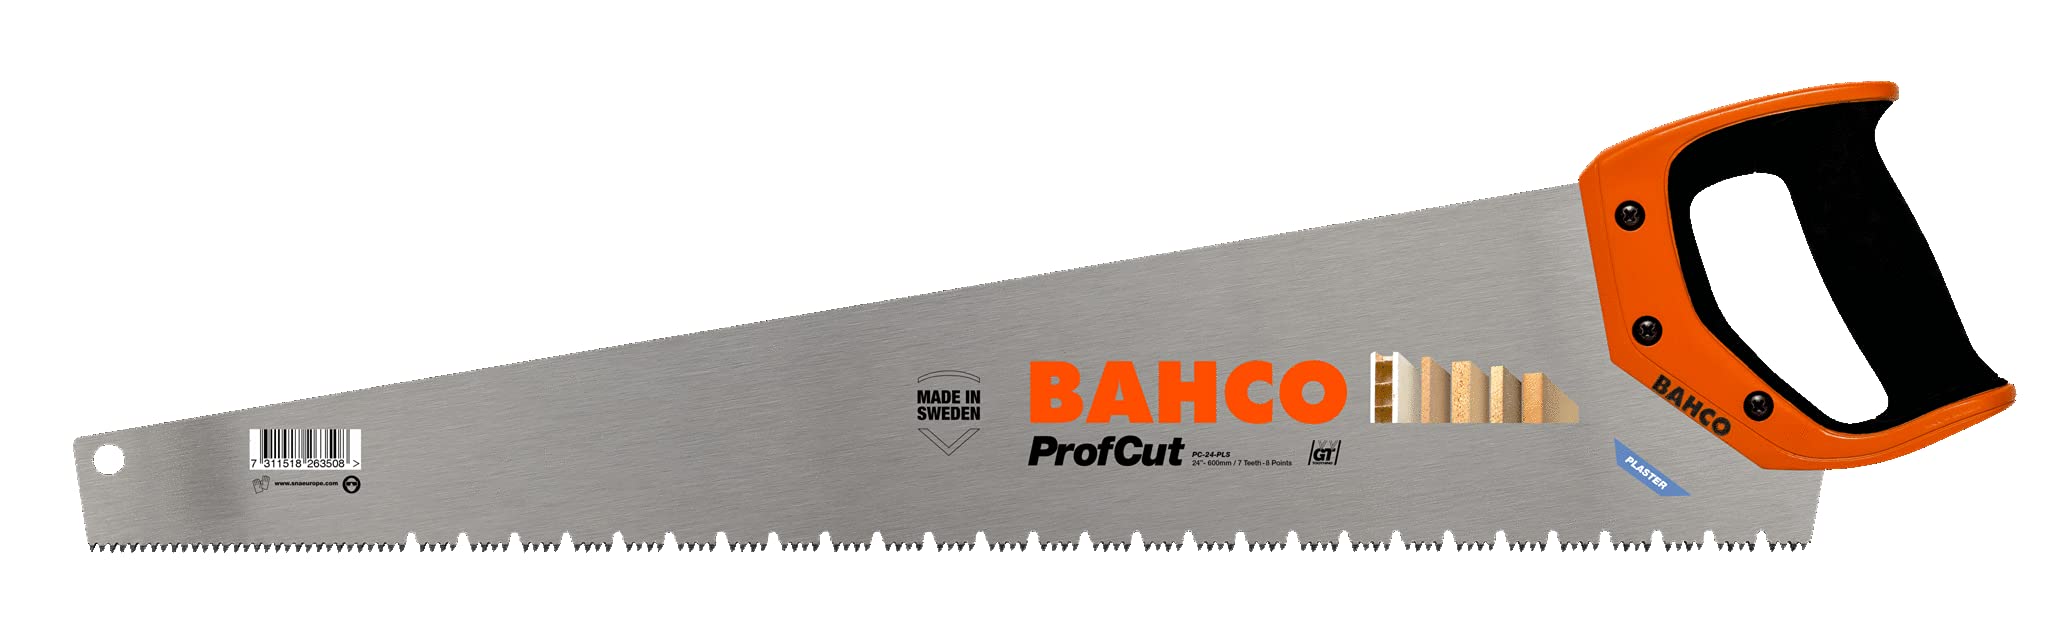 Bahco PC-24-PLS BHPC-24-PLS-A Gipsplattensäge Profcut mit 2K Handgriff Blattlänge 600 mm